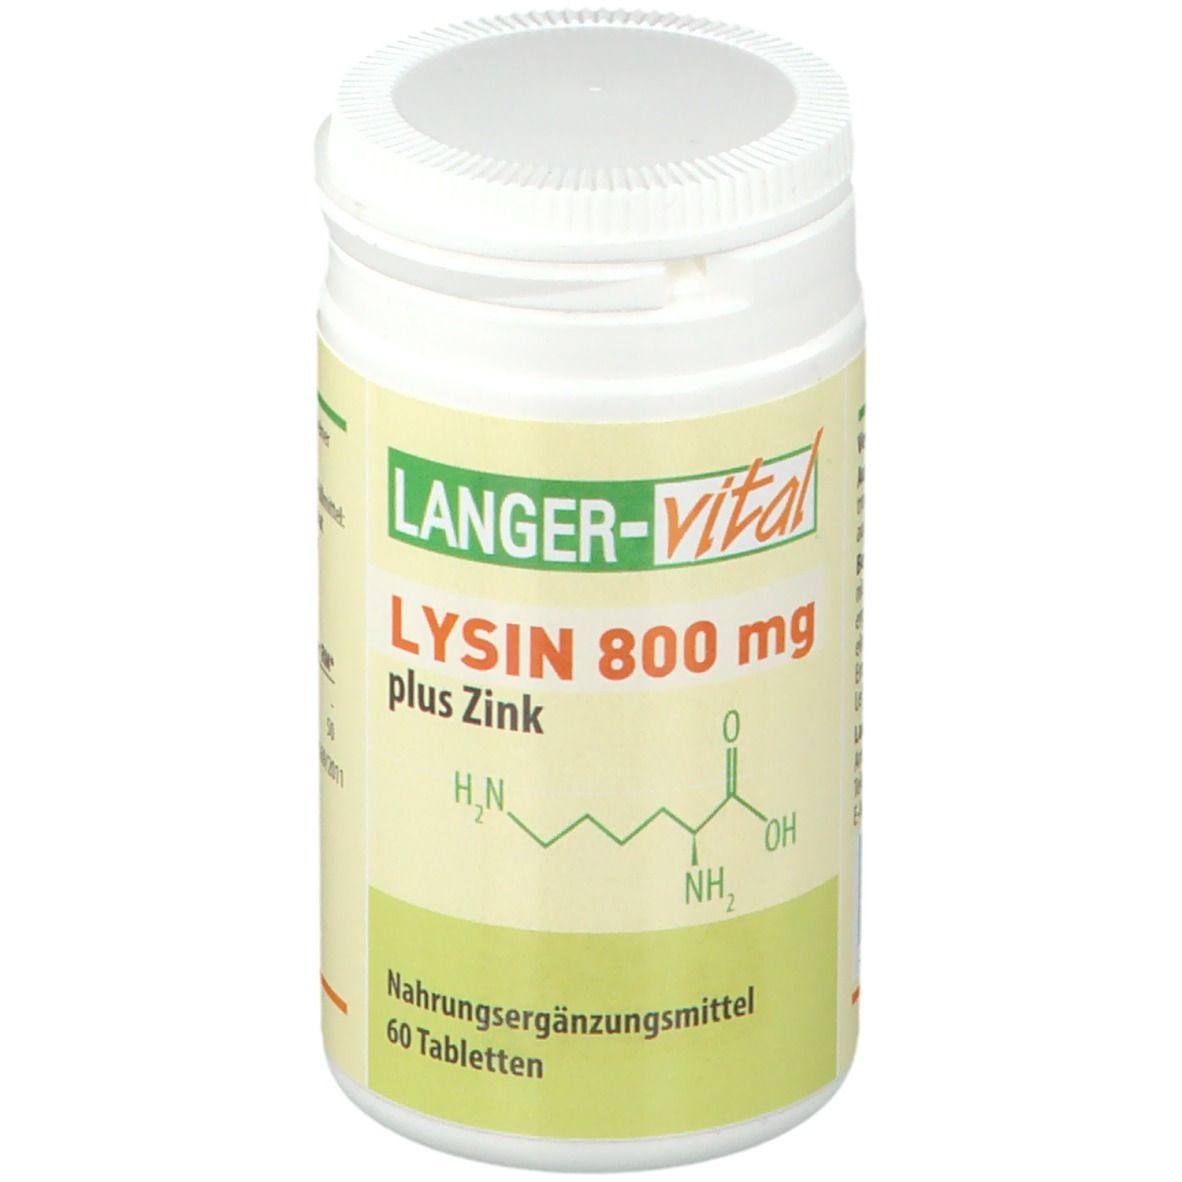 Image of LANGER-vital LYSIN 800 mg plus Zink